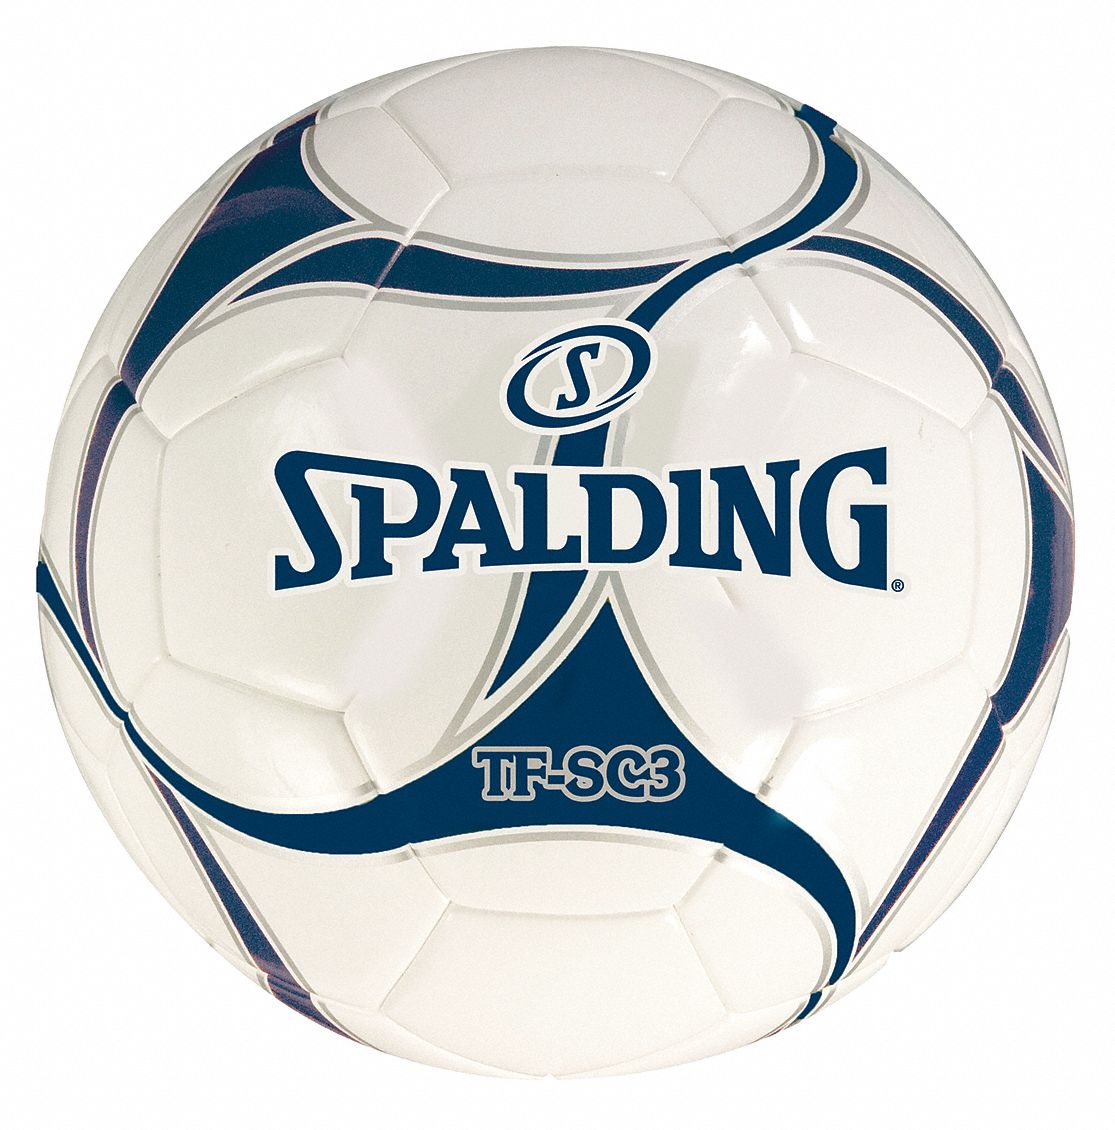 12R338 - Soccer Ball Size 5